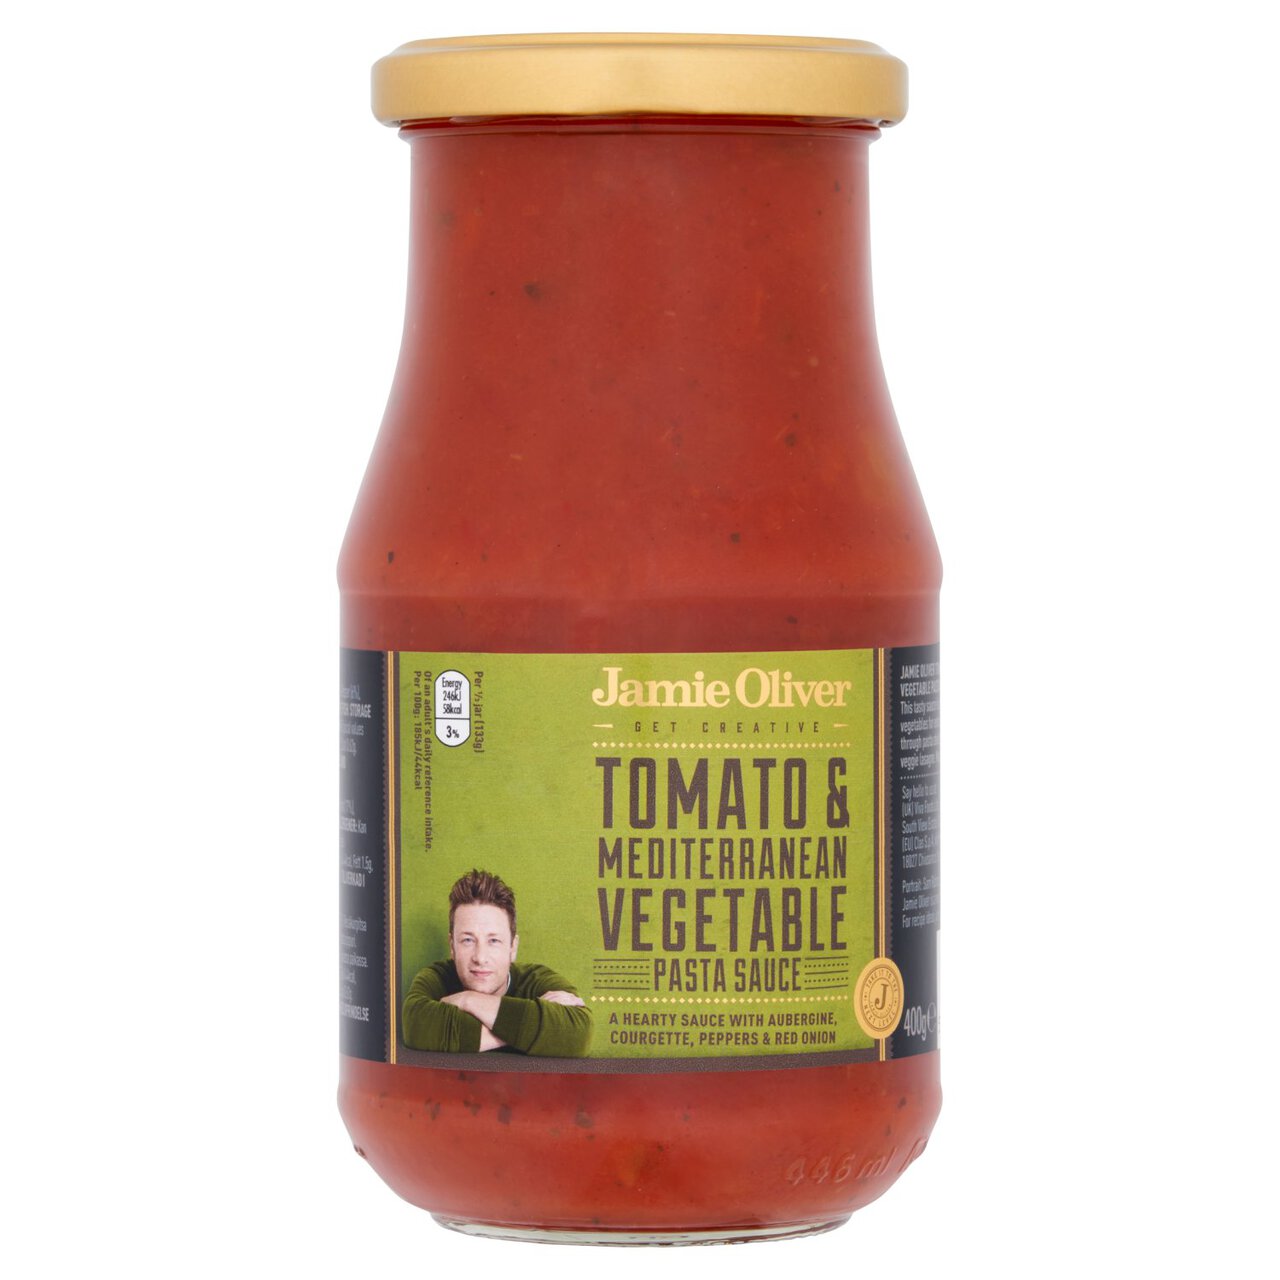 Jamie Oliver Tomato & Mediterranean Vegetable Pasta Sauce 400g